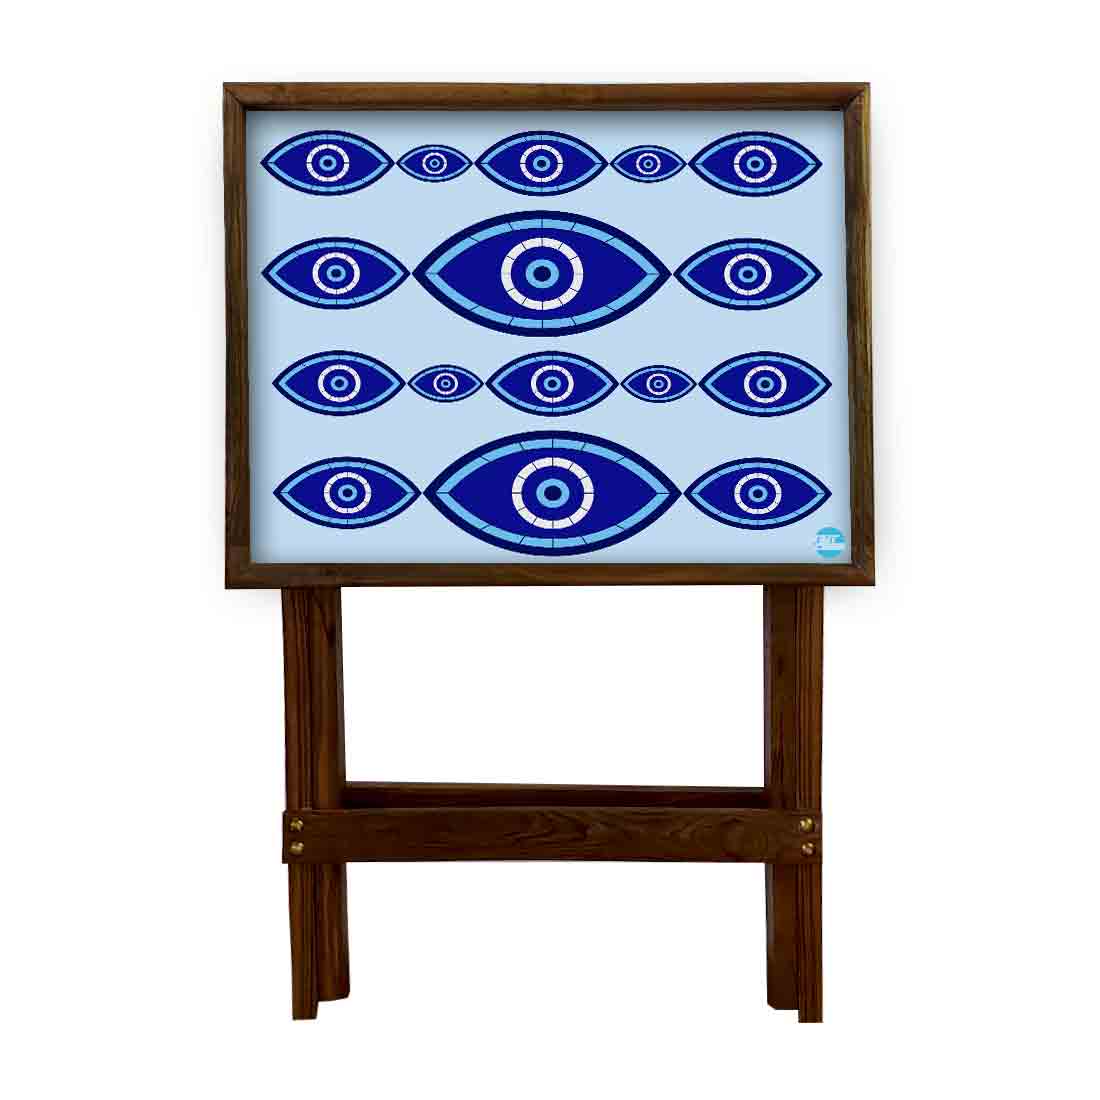 Wooden TV Tables for Eating Breakfast Serving Table - Evil Eye Protector Nutcase